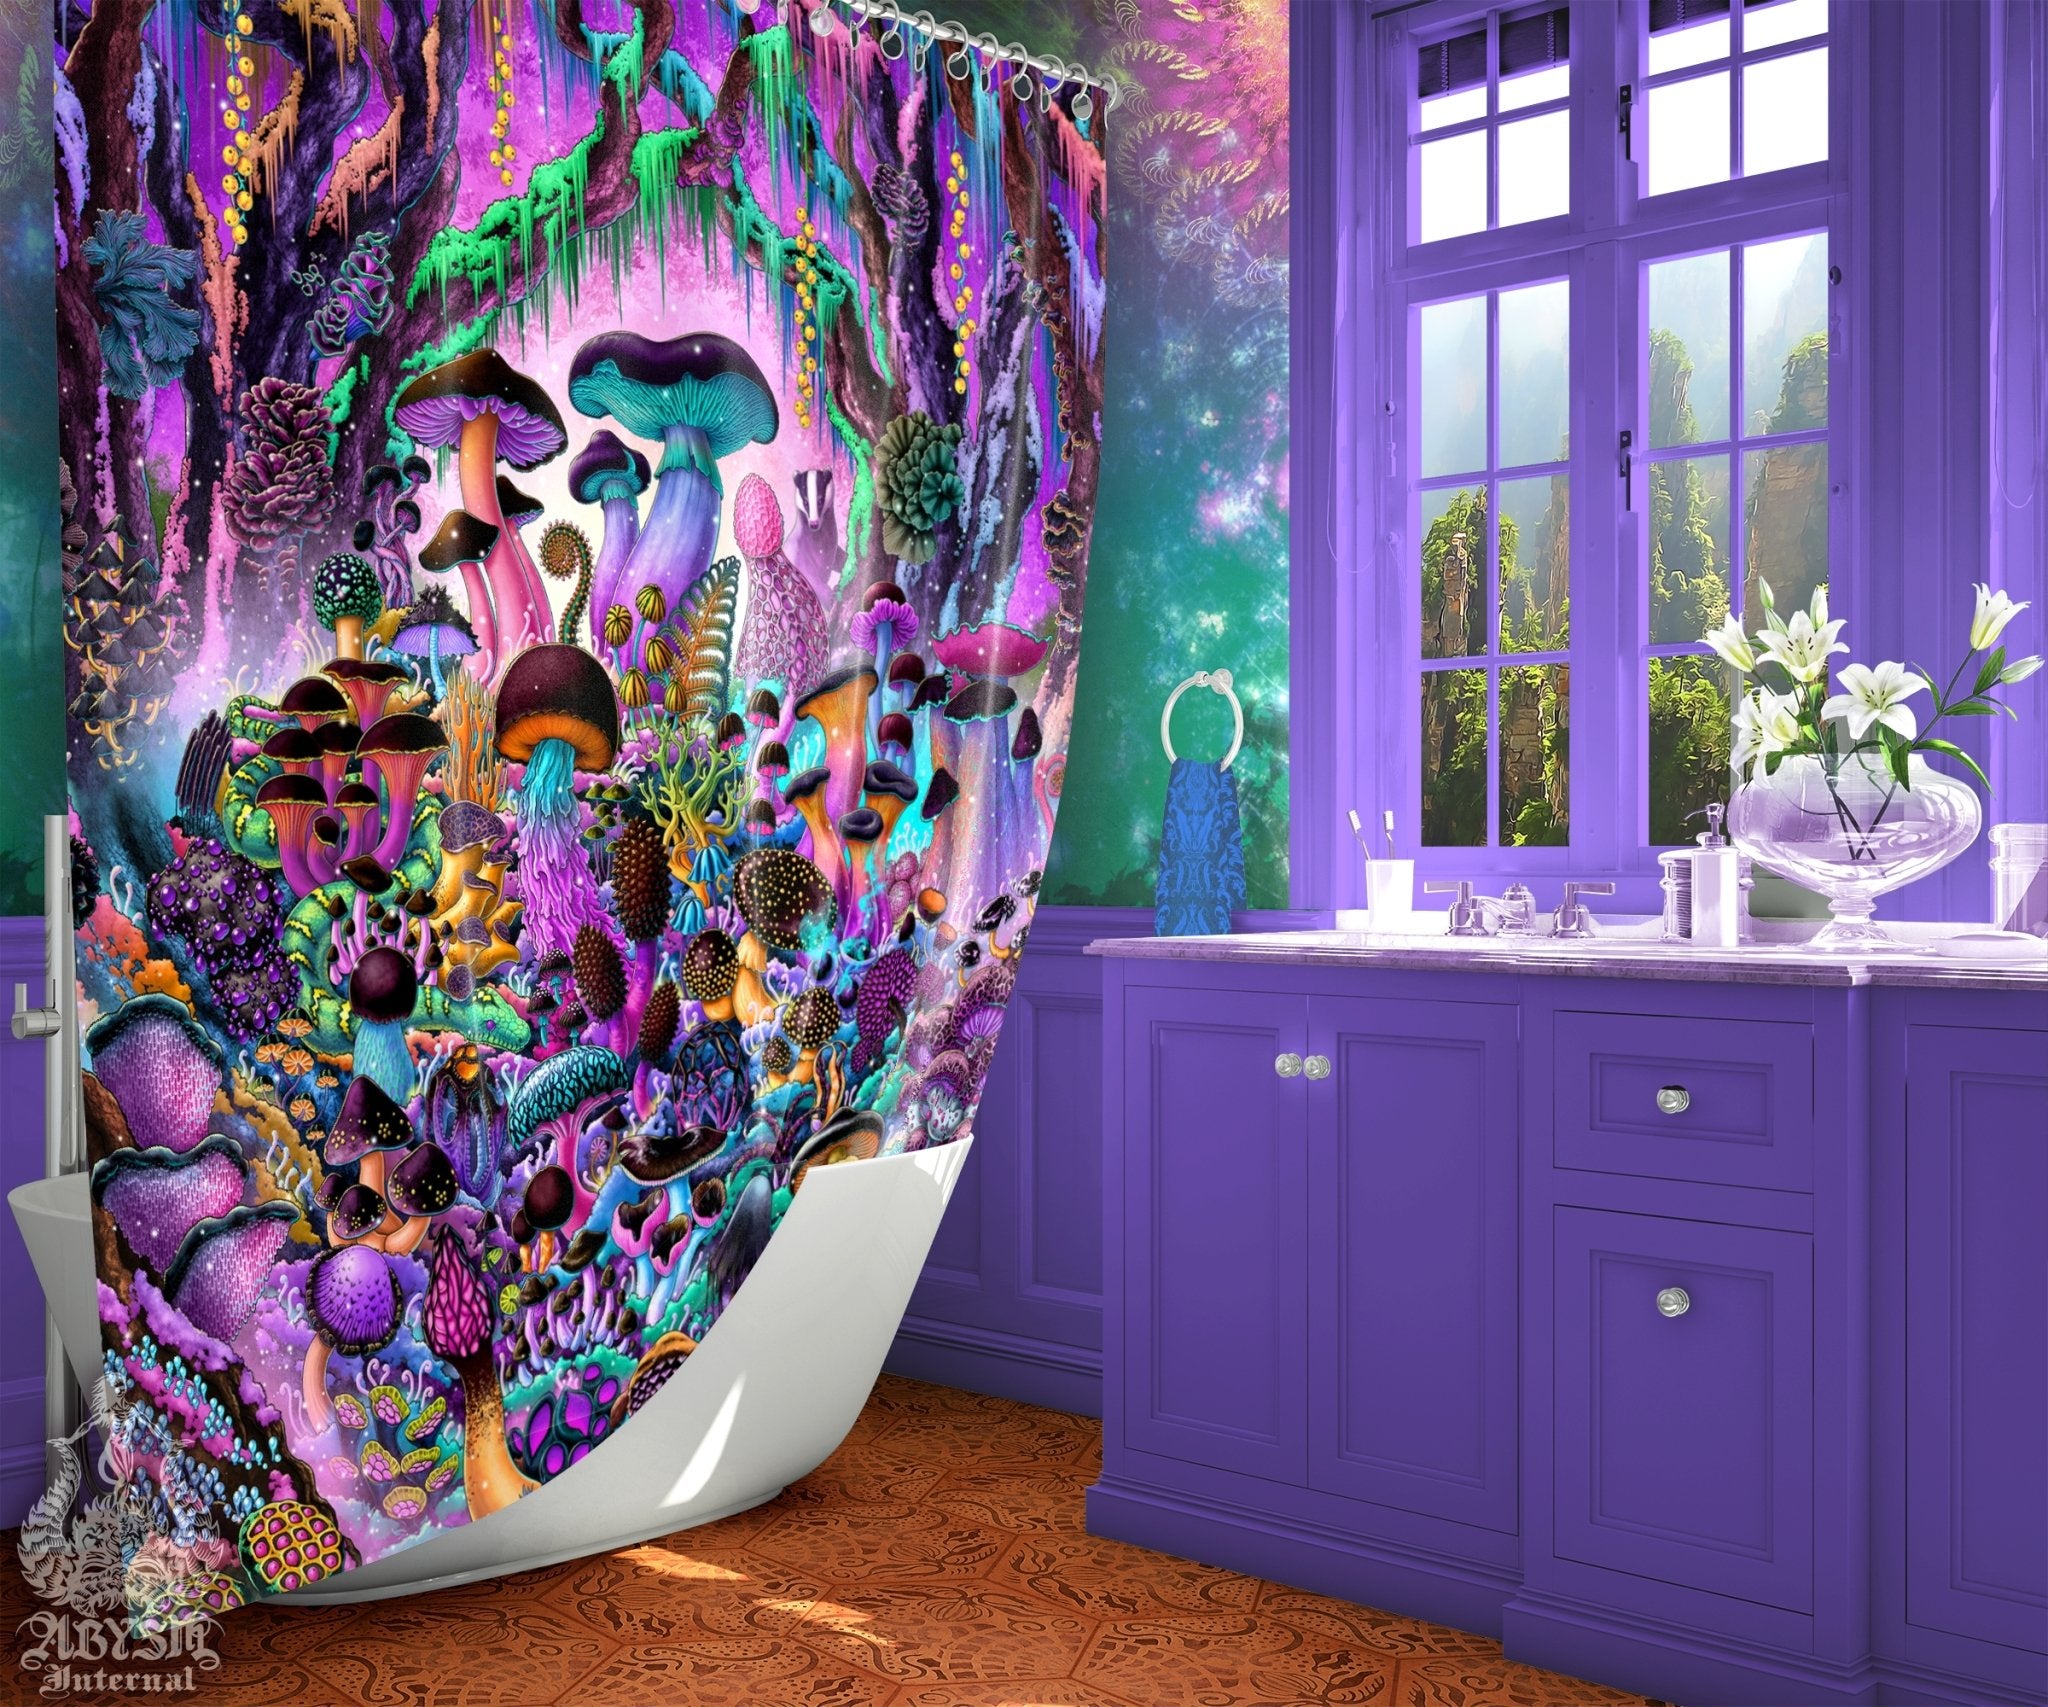 Mushrooms Shower Curtain, Girl Bathroom Decor, Aesthetic Home Art, Mycologist Gift - Pastel Black Magic Shrooms - Abysm Internal